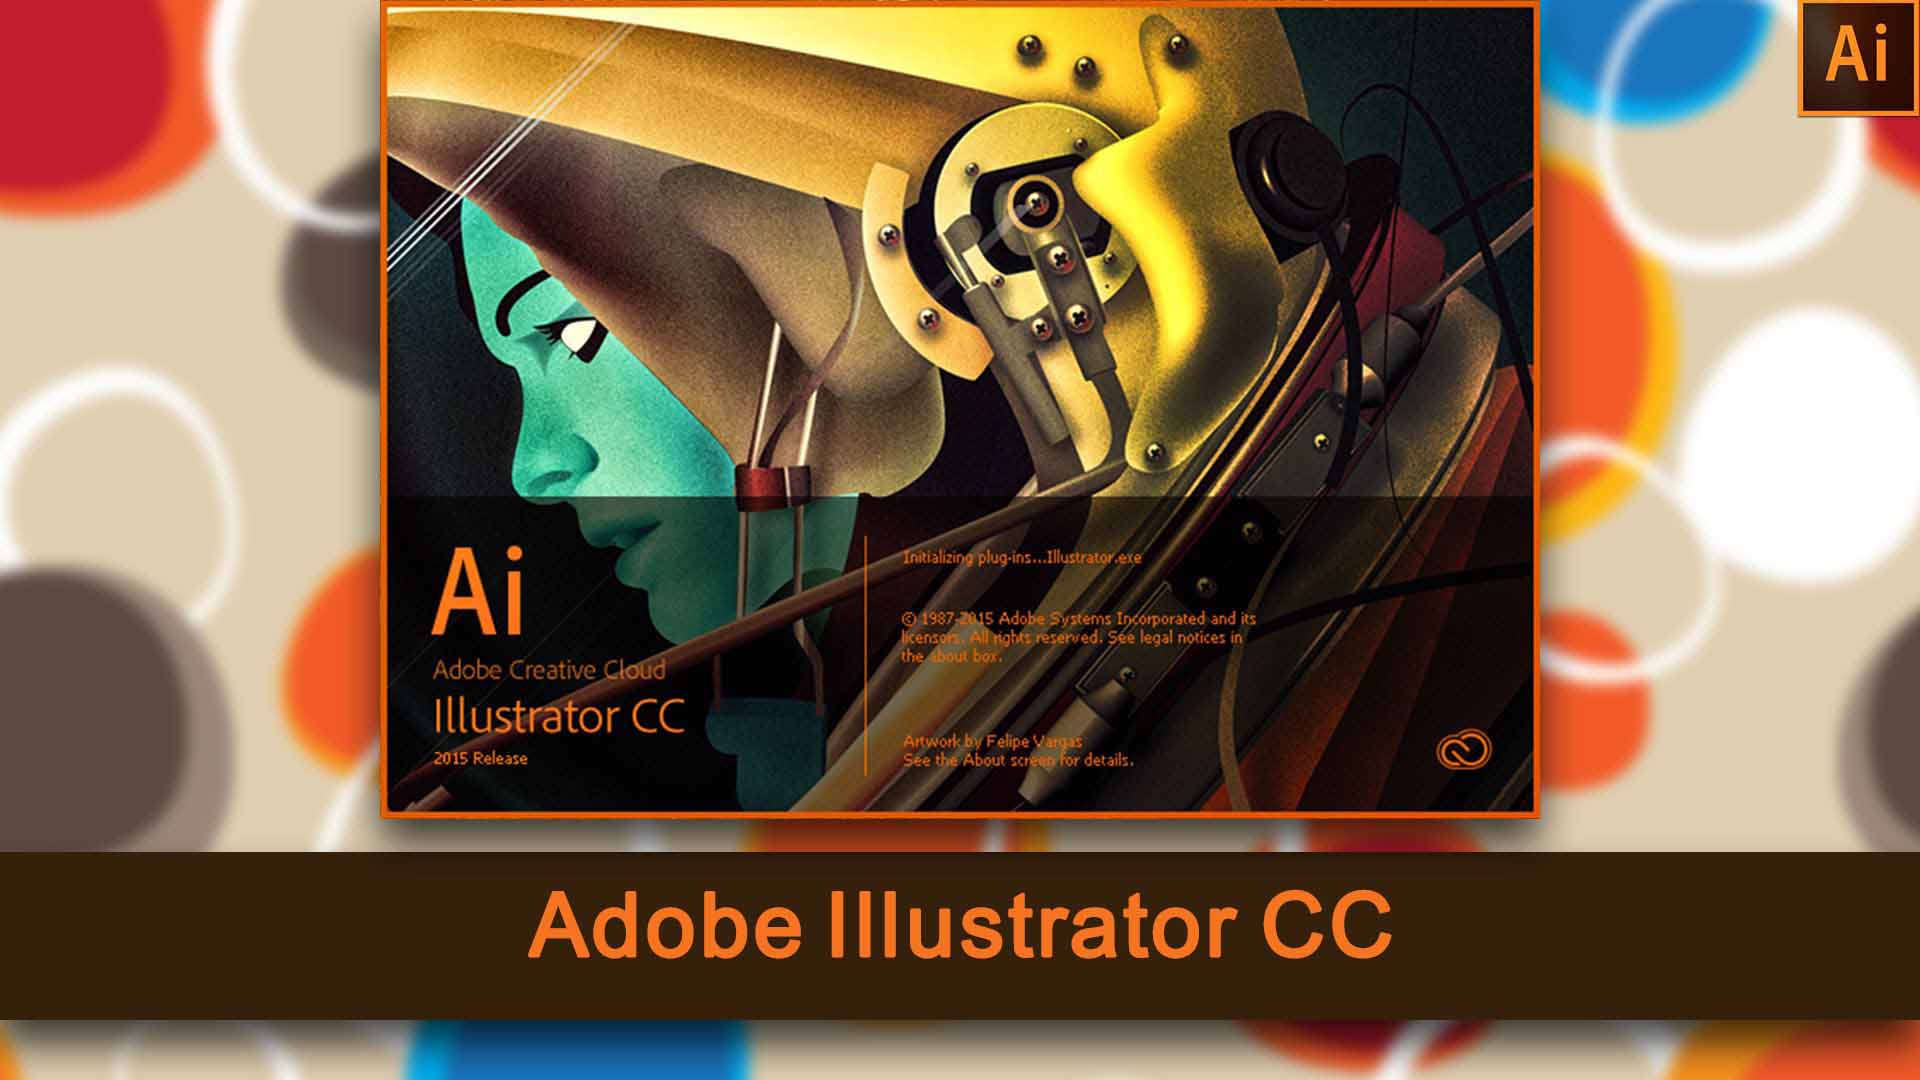 Adobe Illustrator CC Full Version Free Download